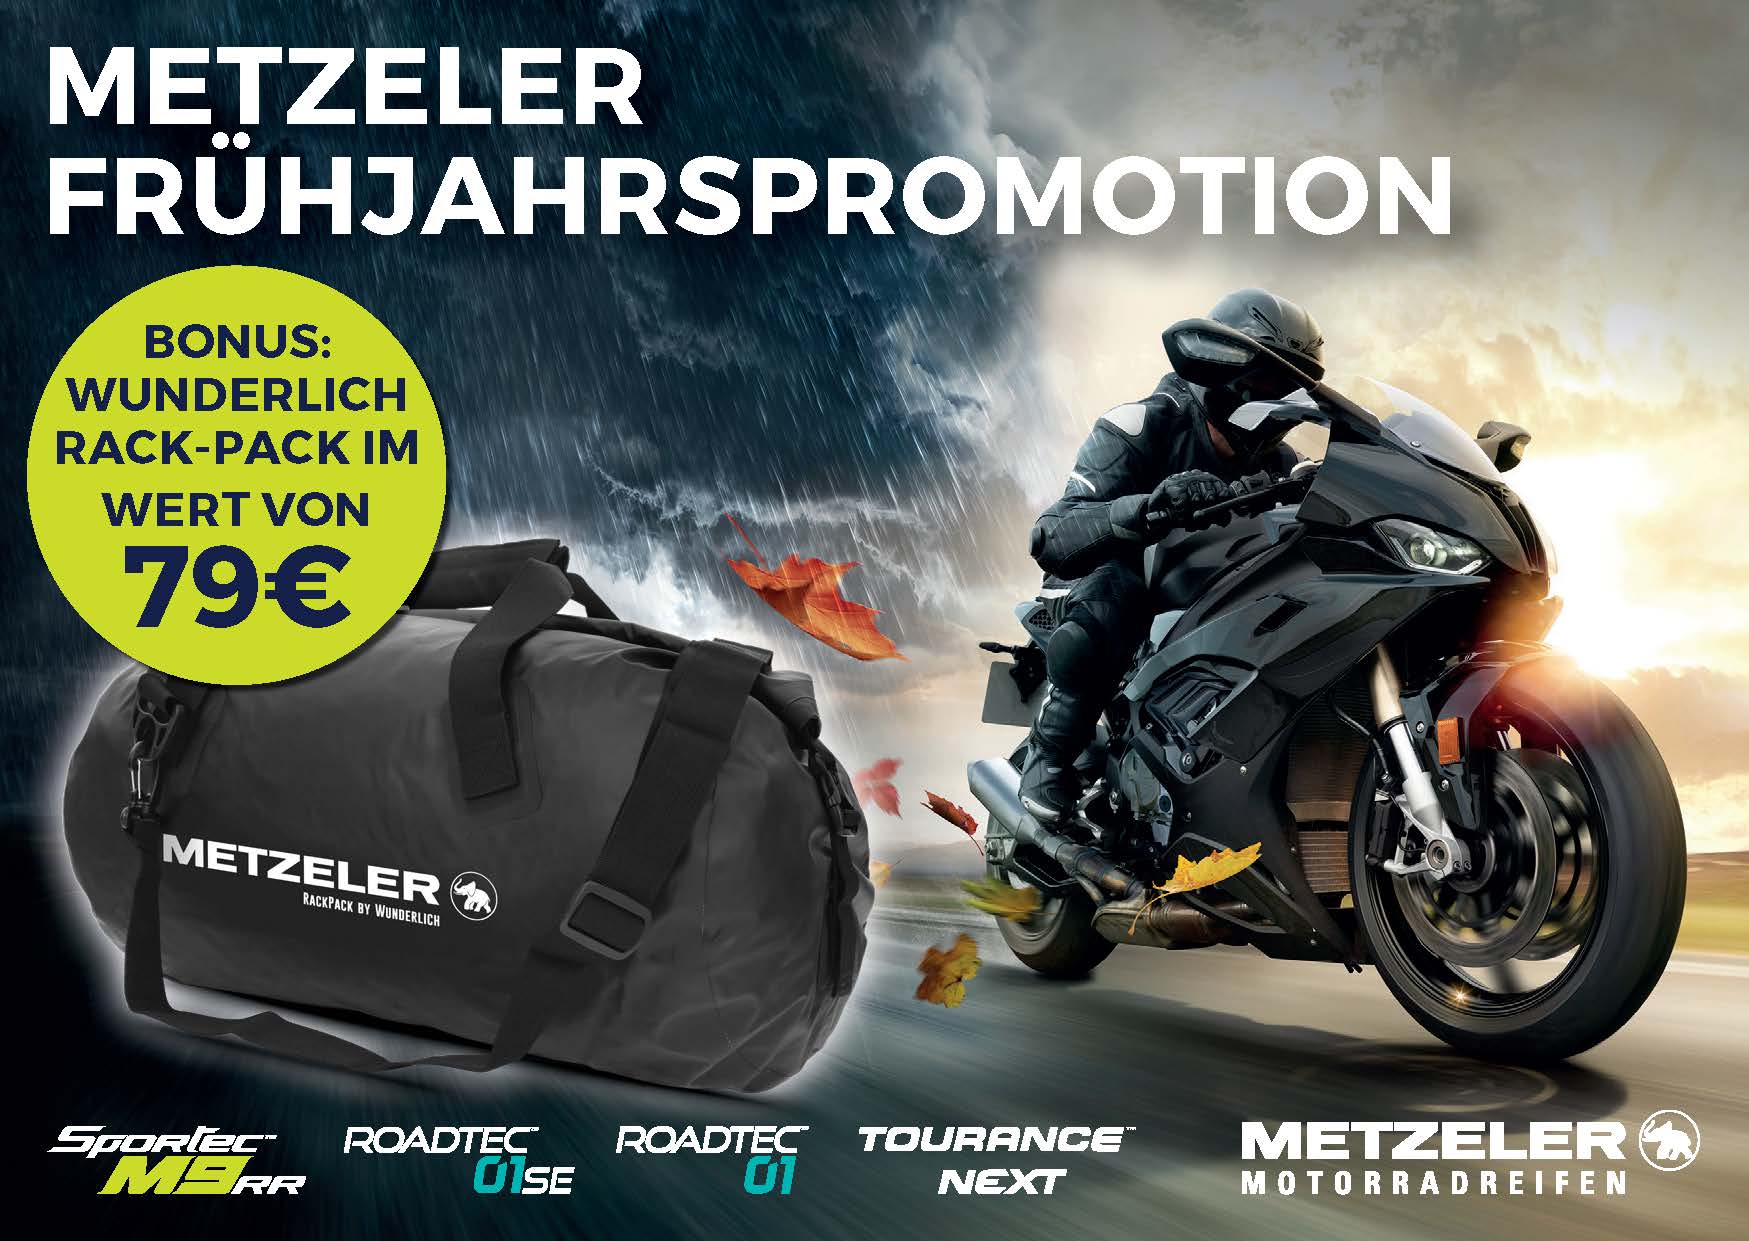 metzeler-fr-hjahrs-promotion-2020